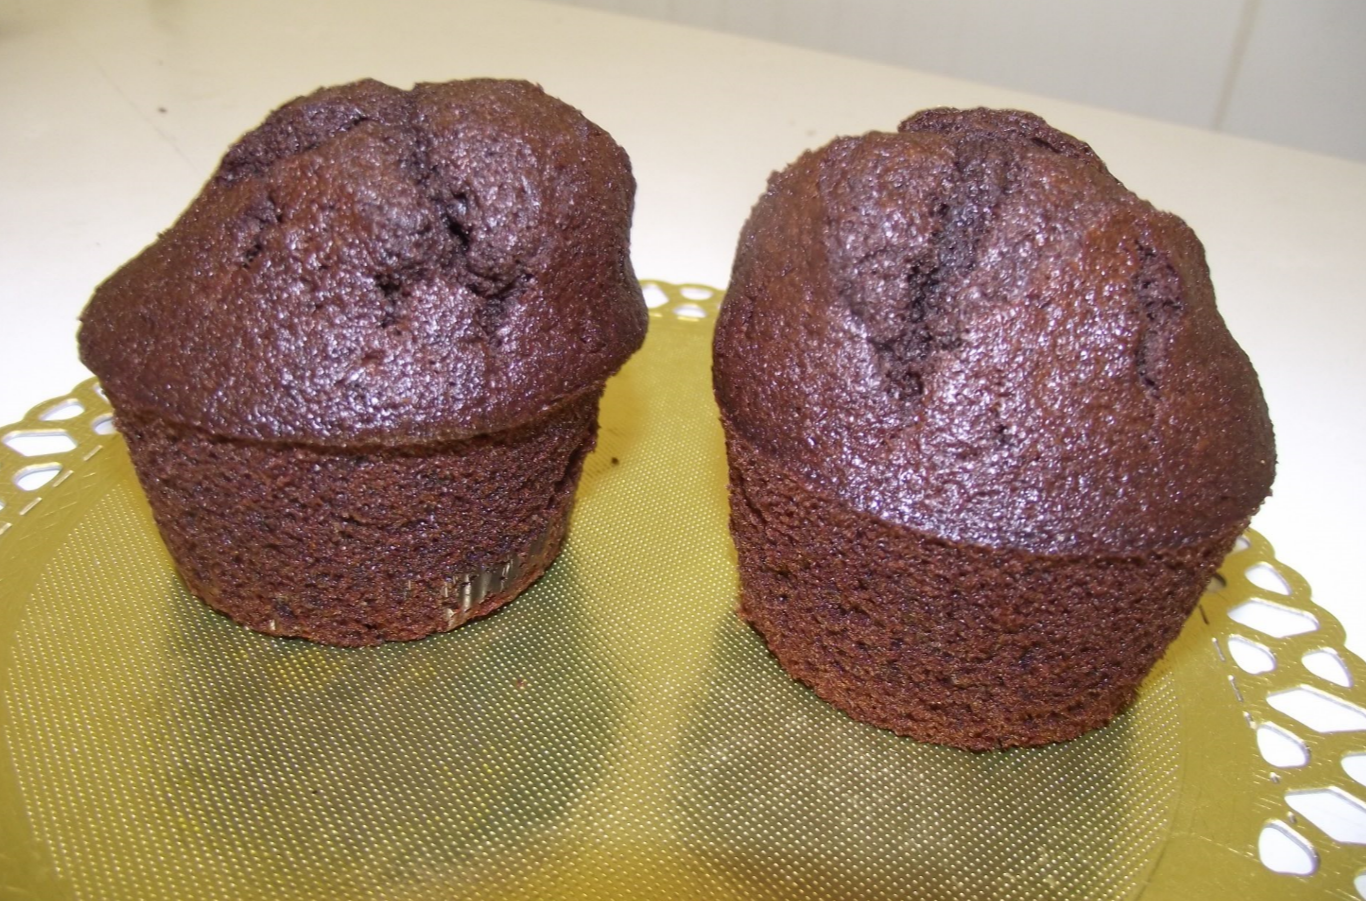 muffins au chocolat noir intence